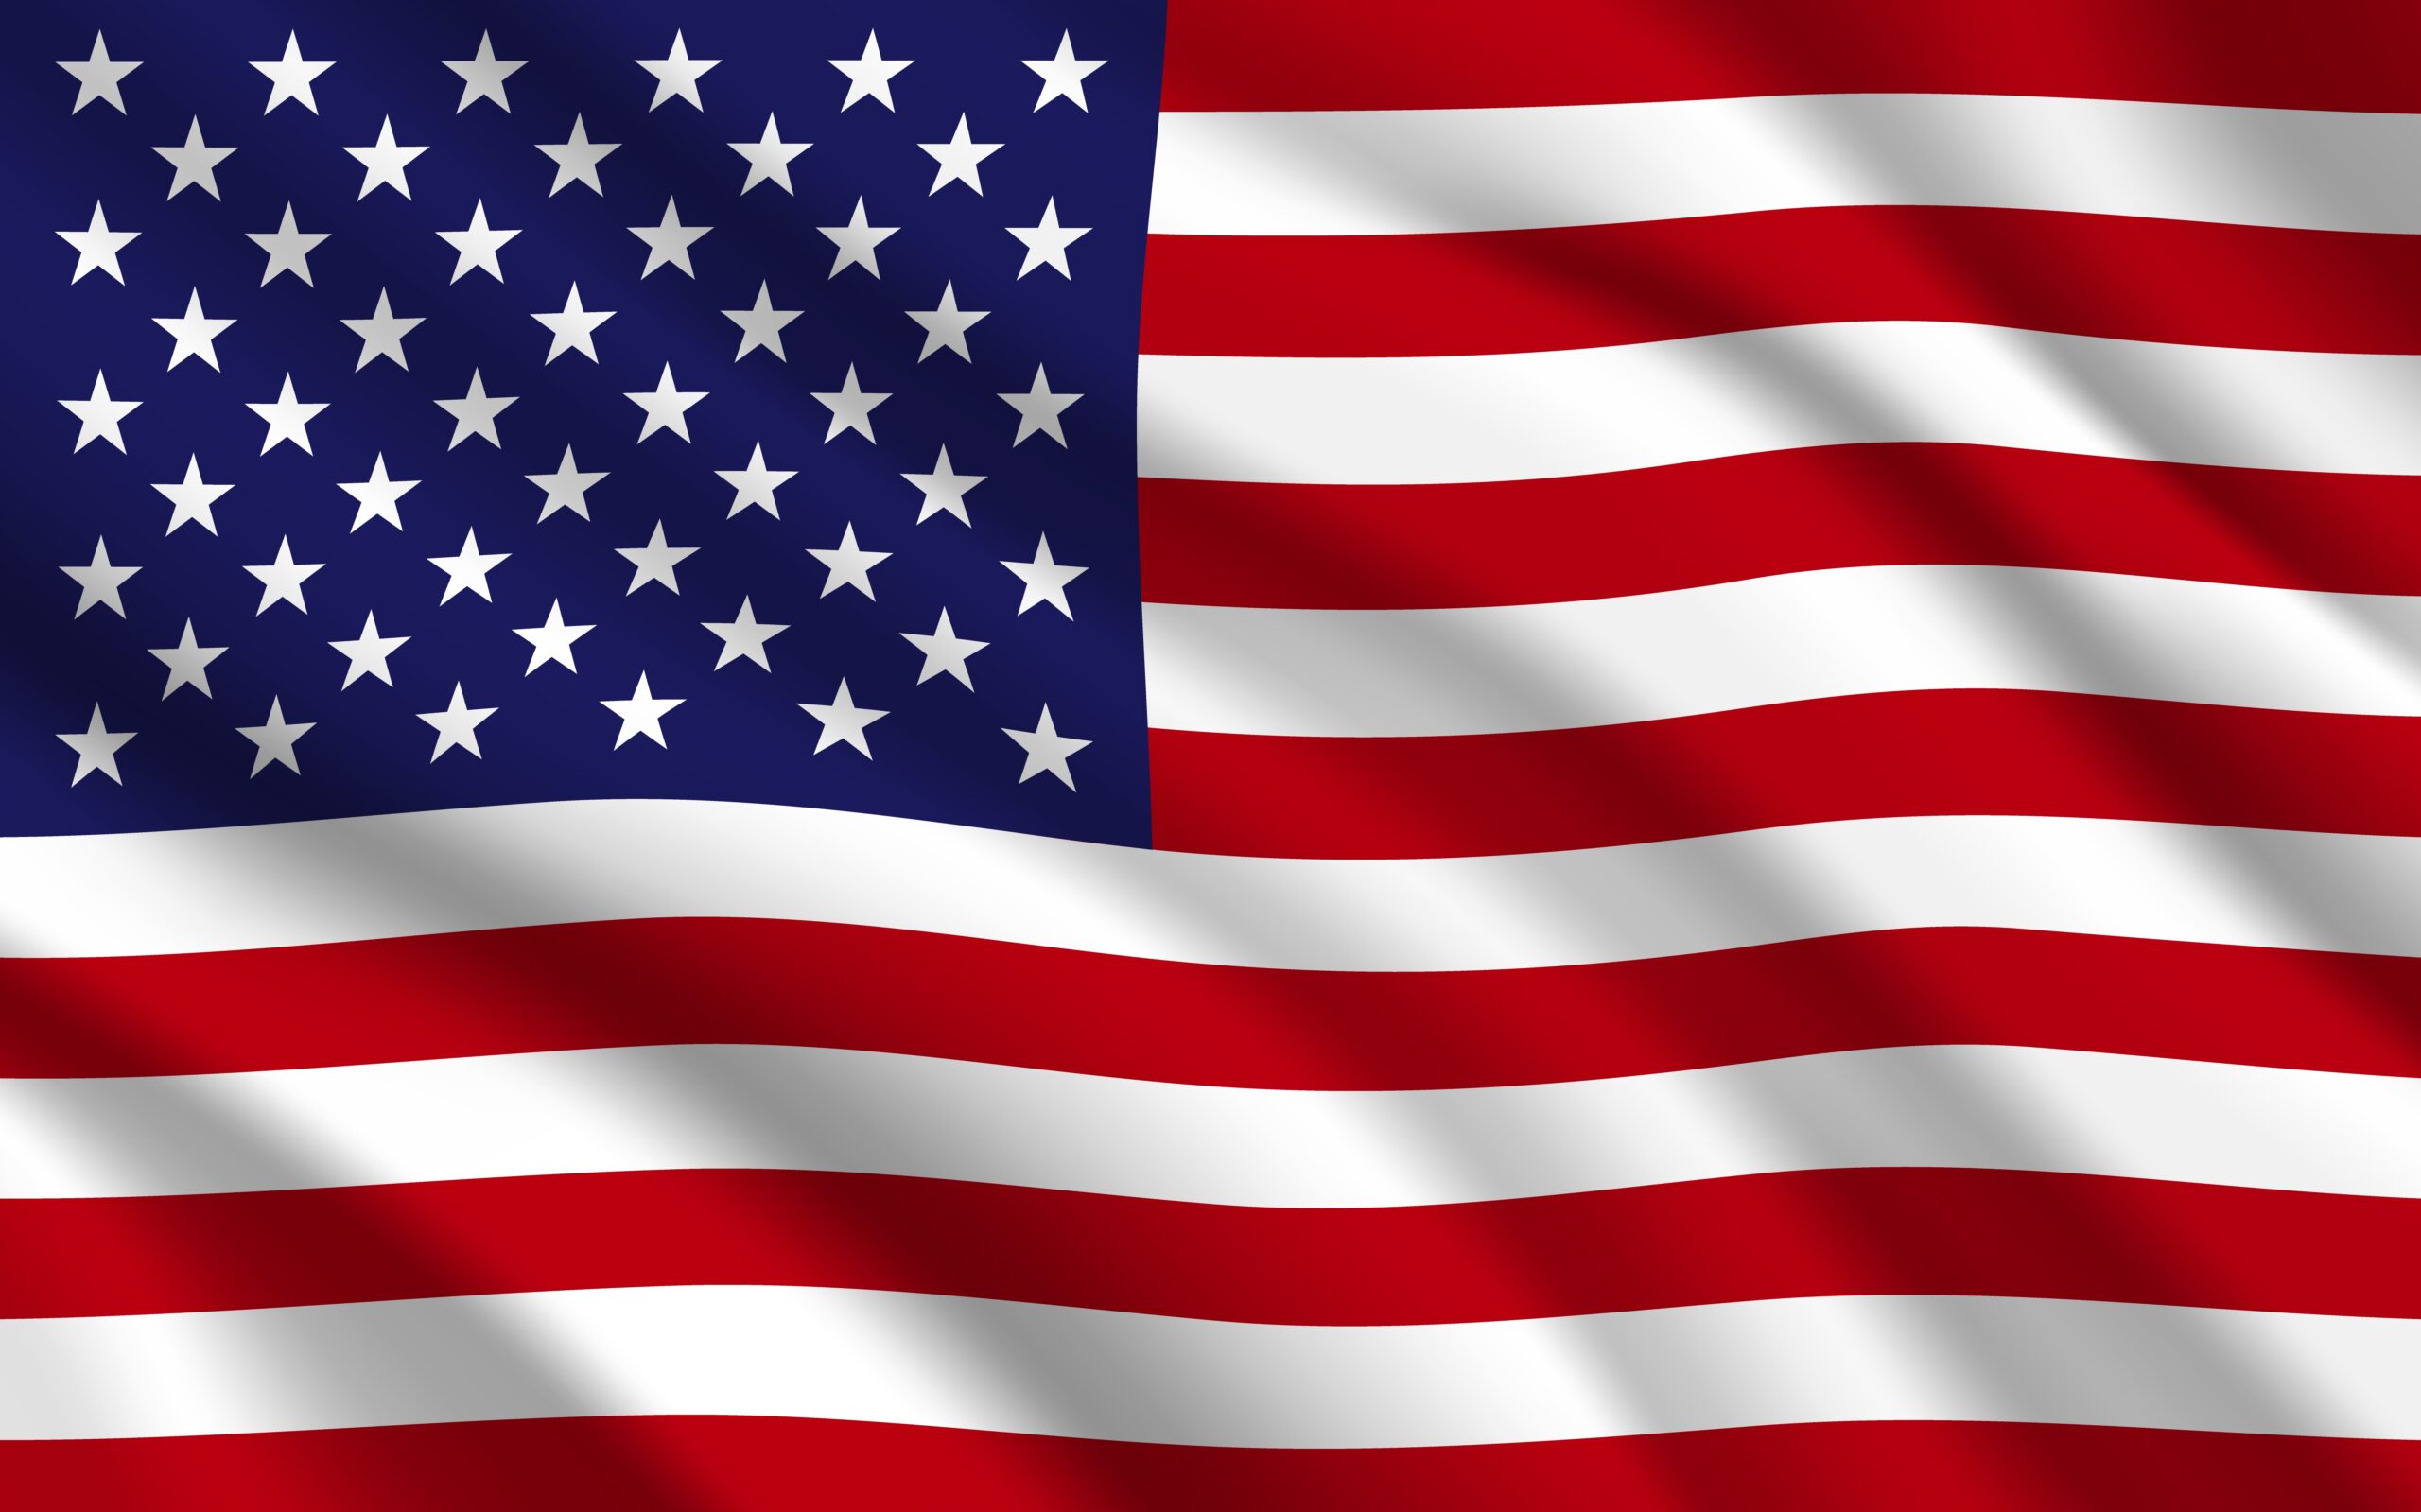 American Flag or Star Spangled Banner